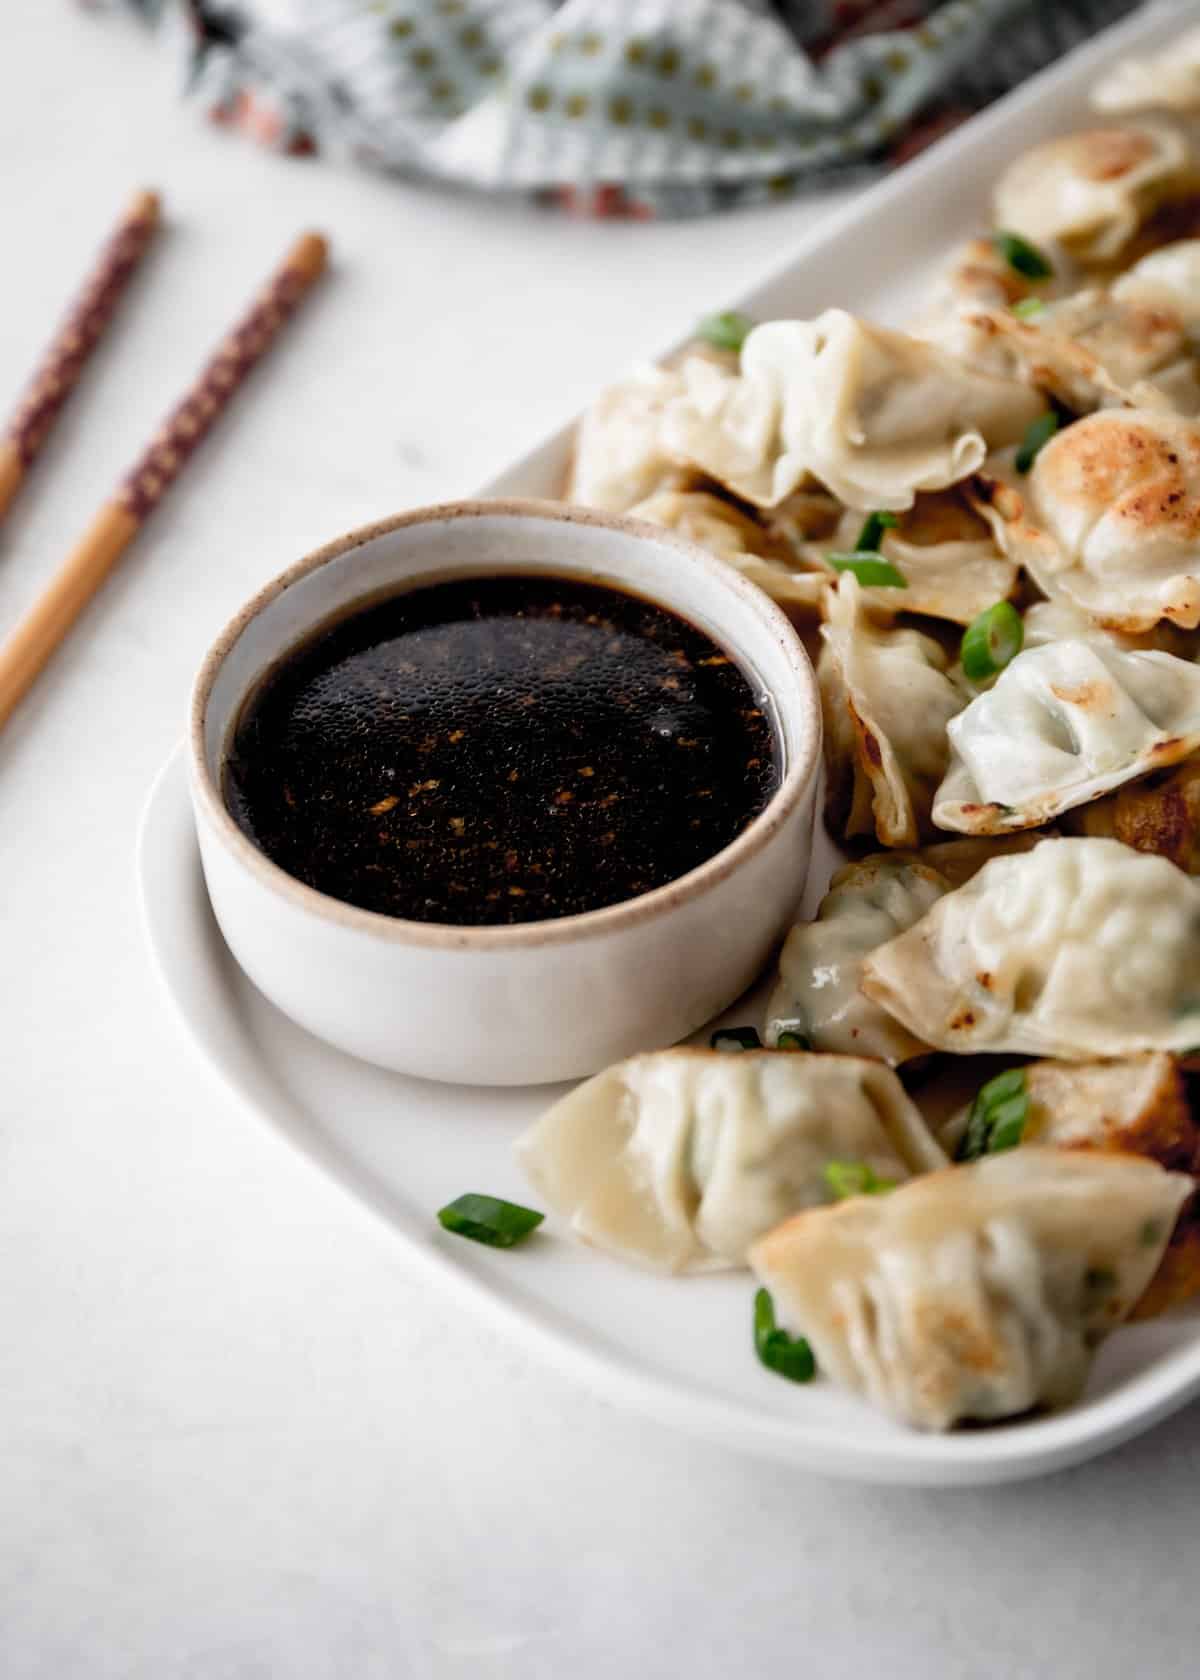 dumplings and sauce on a white platter